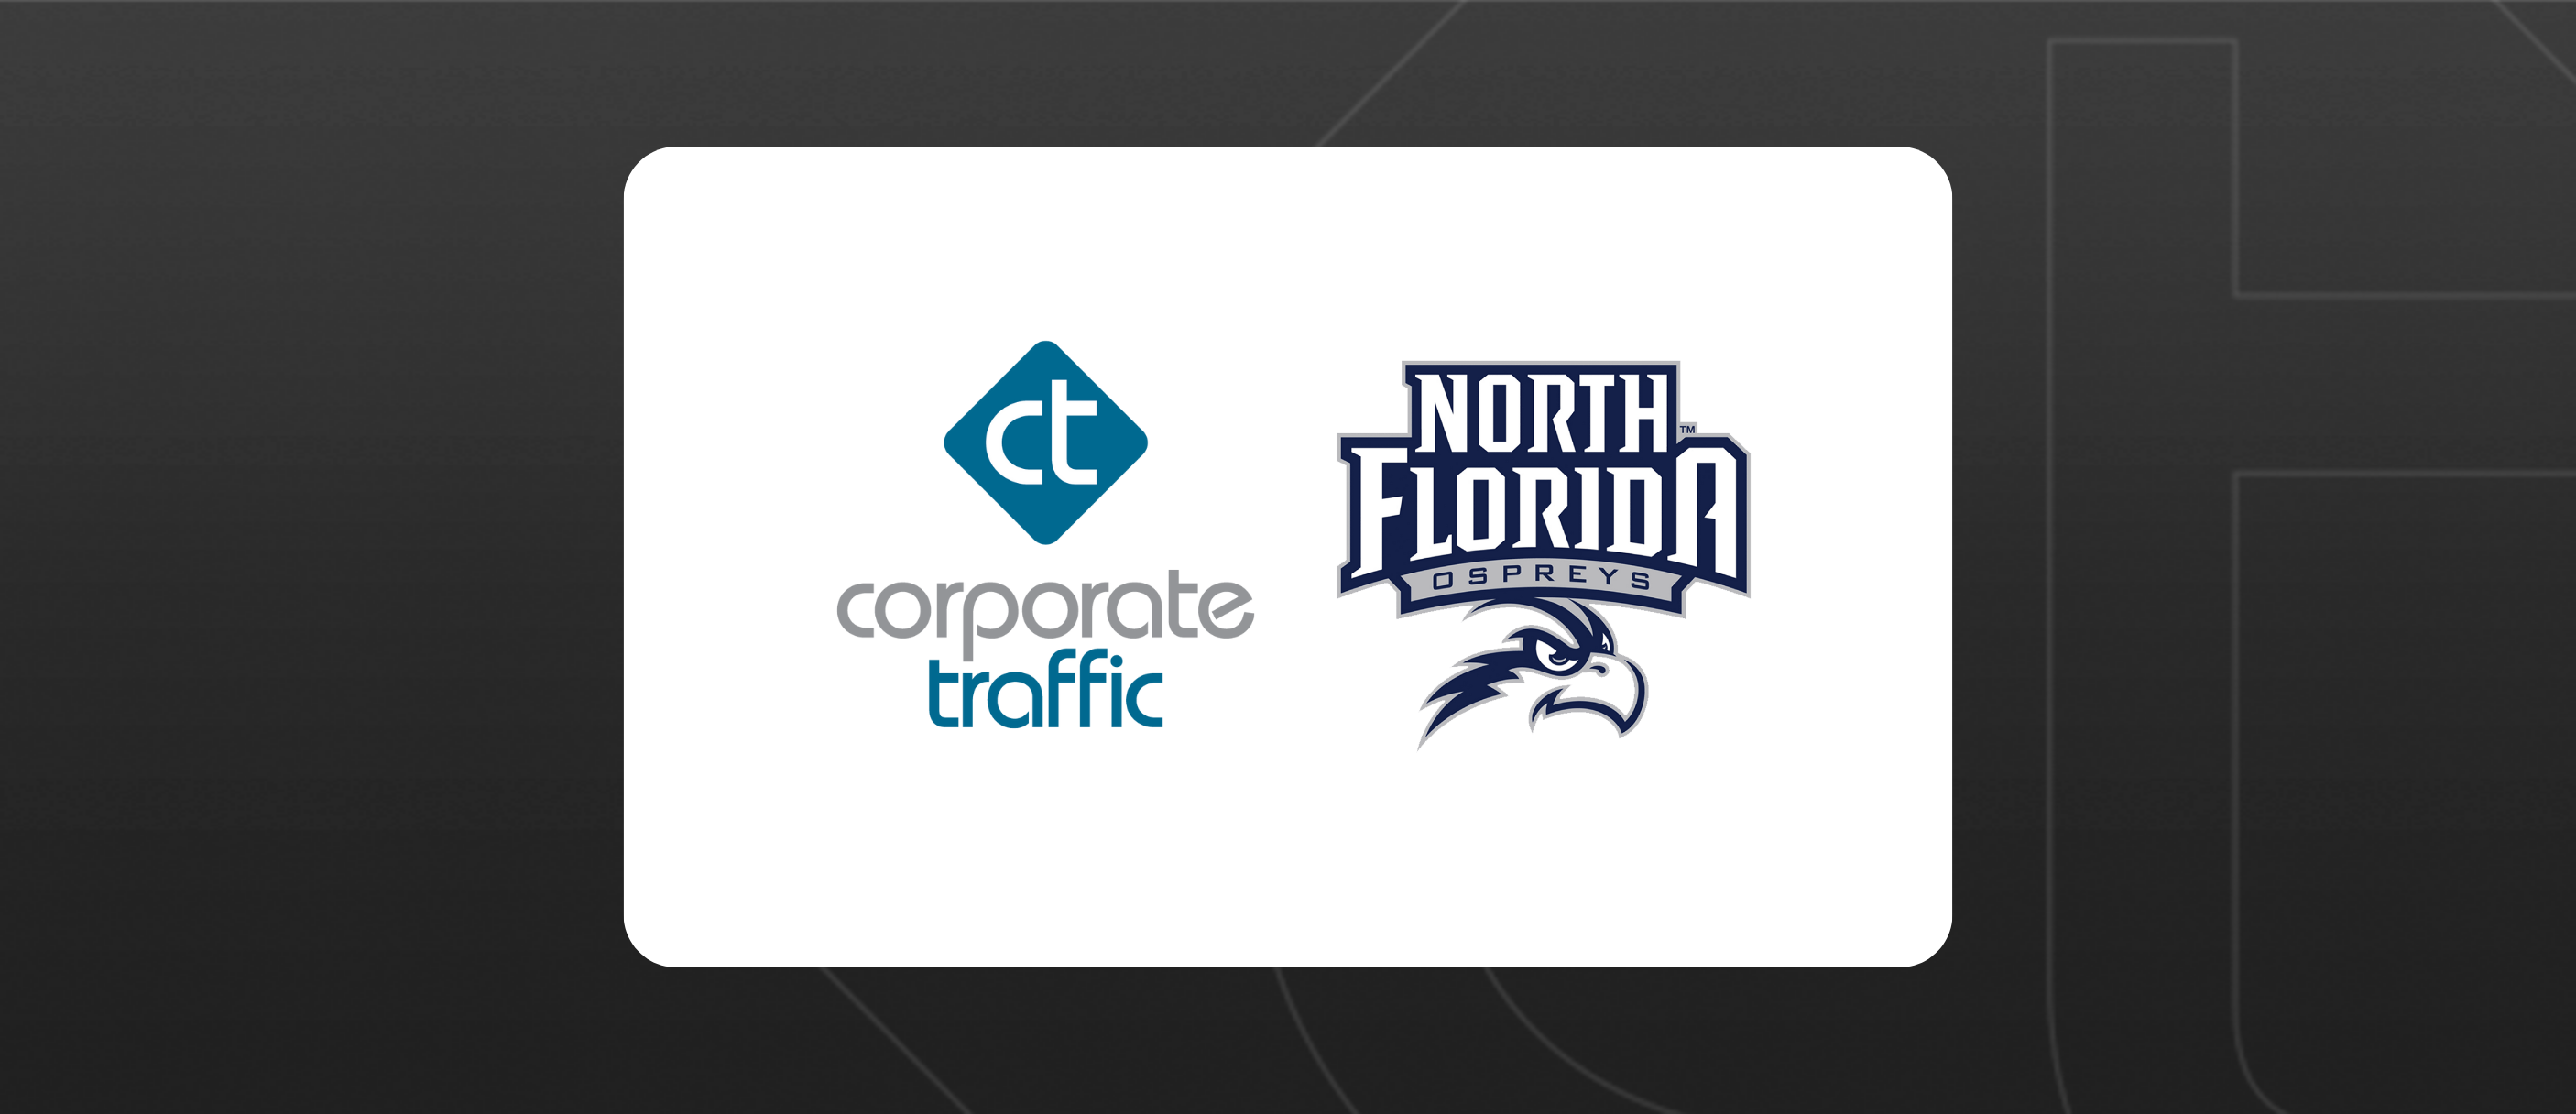 image of corporate traffic and university of north florida NIL partnership